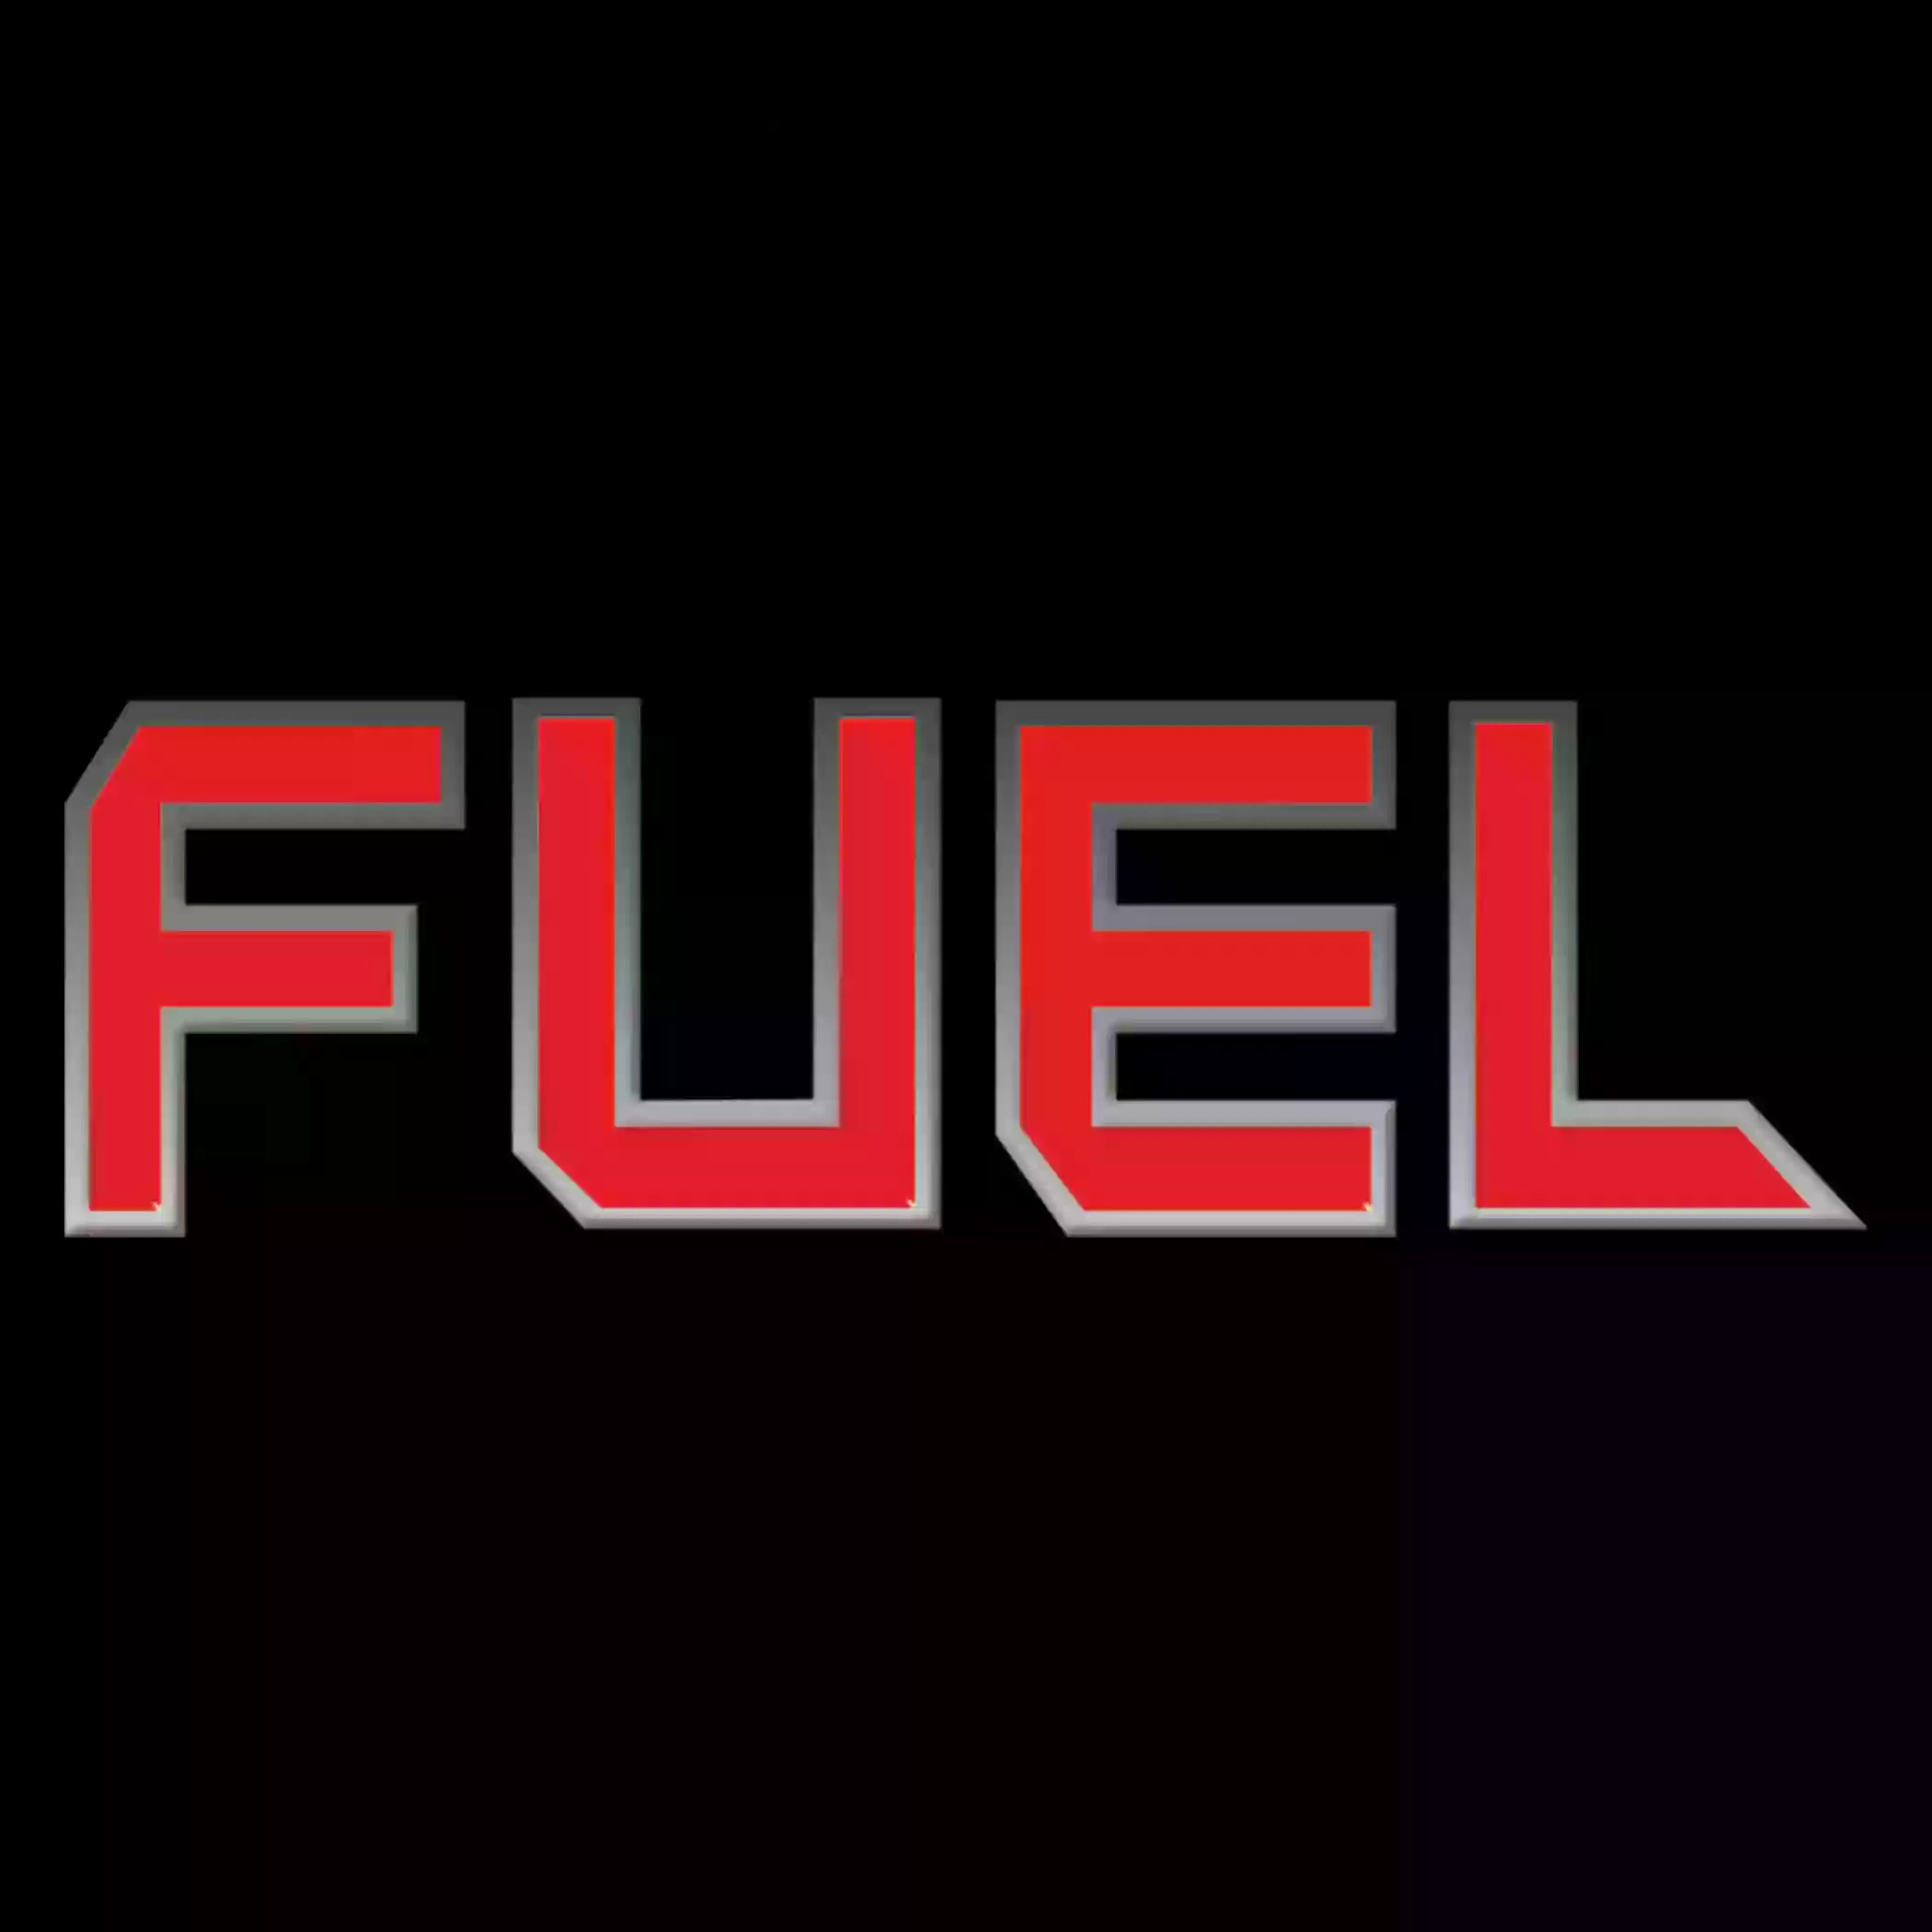 Fuel Rock Club